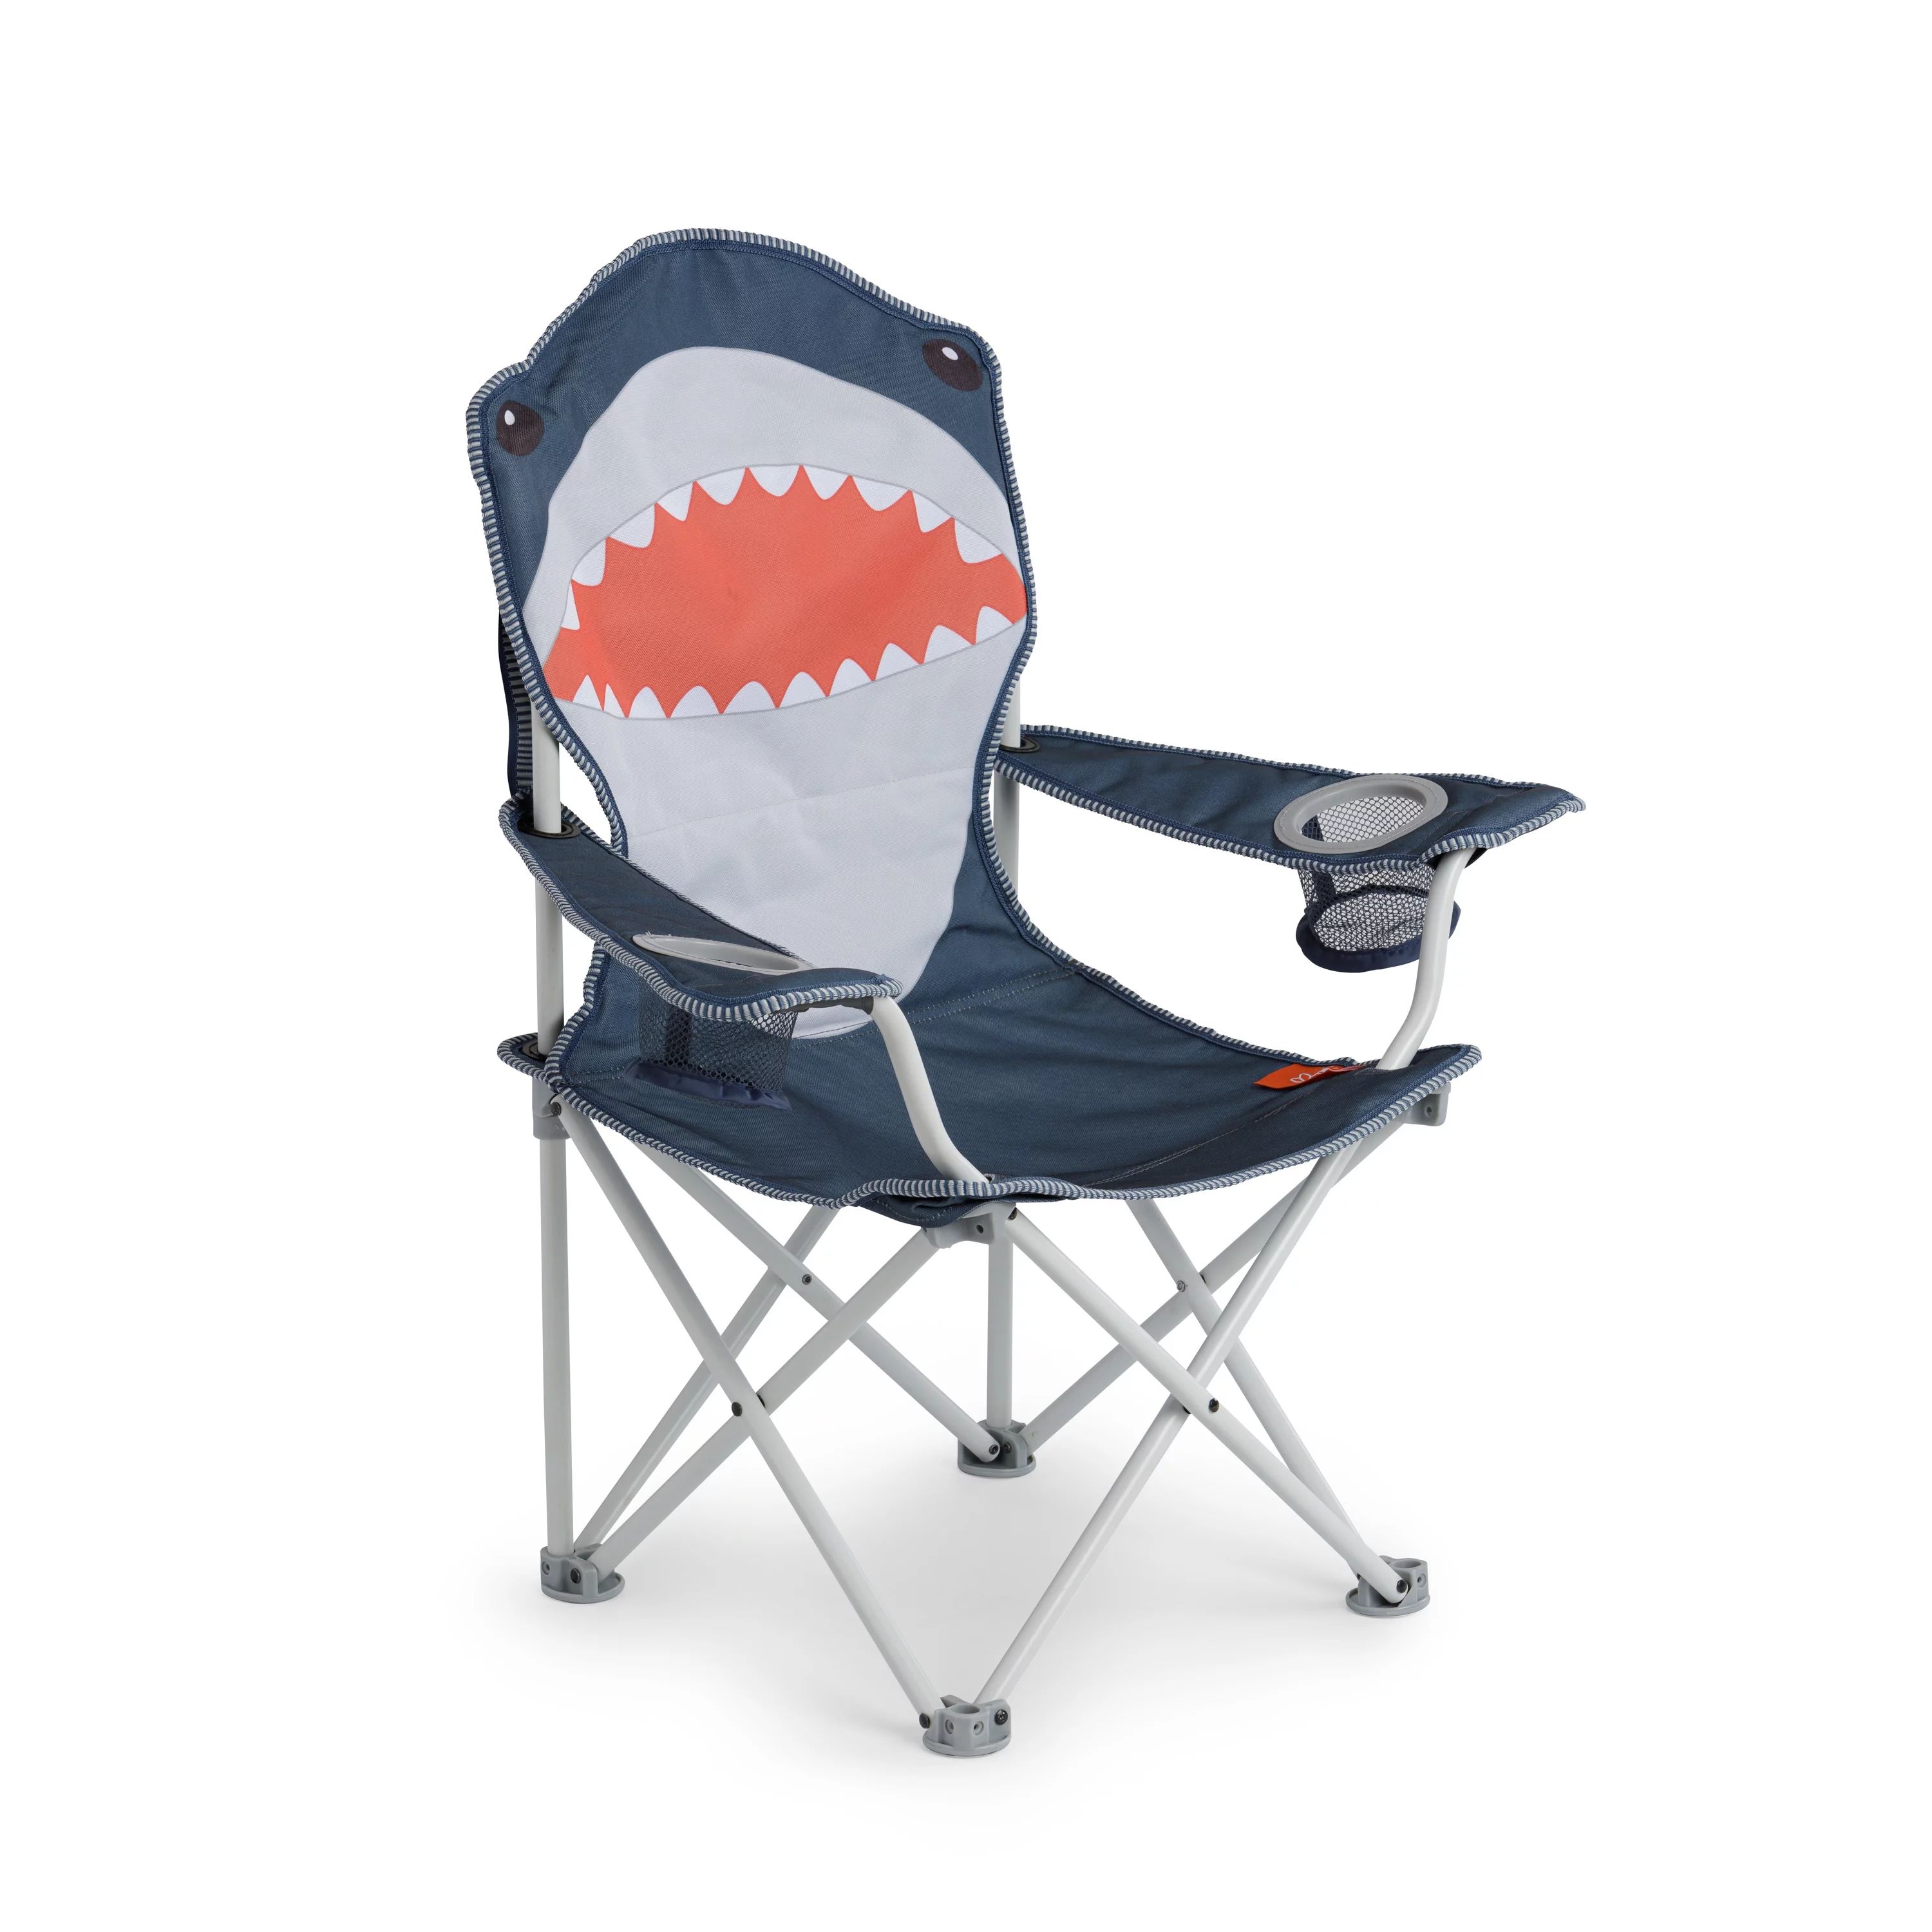 Firefly! Outdoor Gear Finn the Shark Kid's Camping Chair - Navy/Orange/Gray Color | Walmart (US)